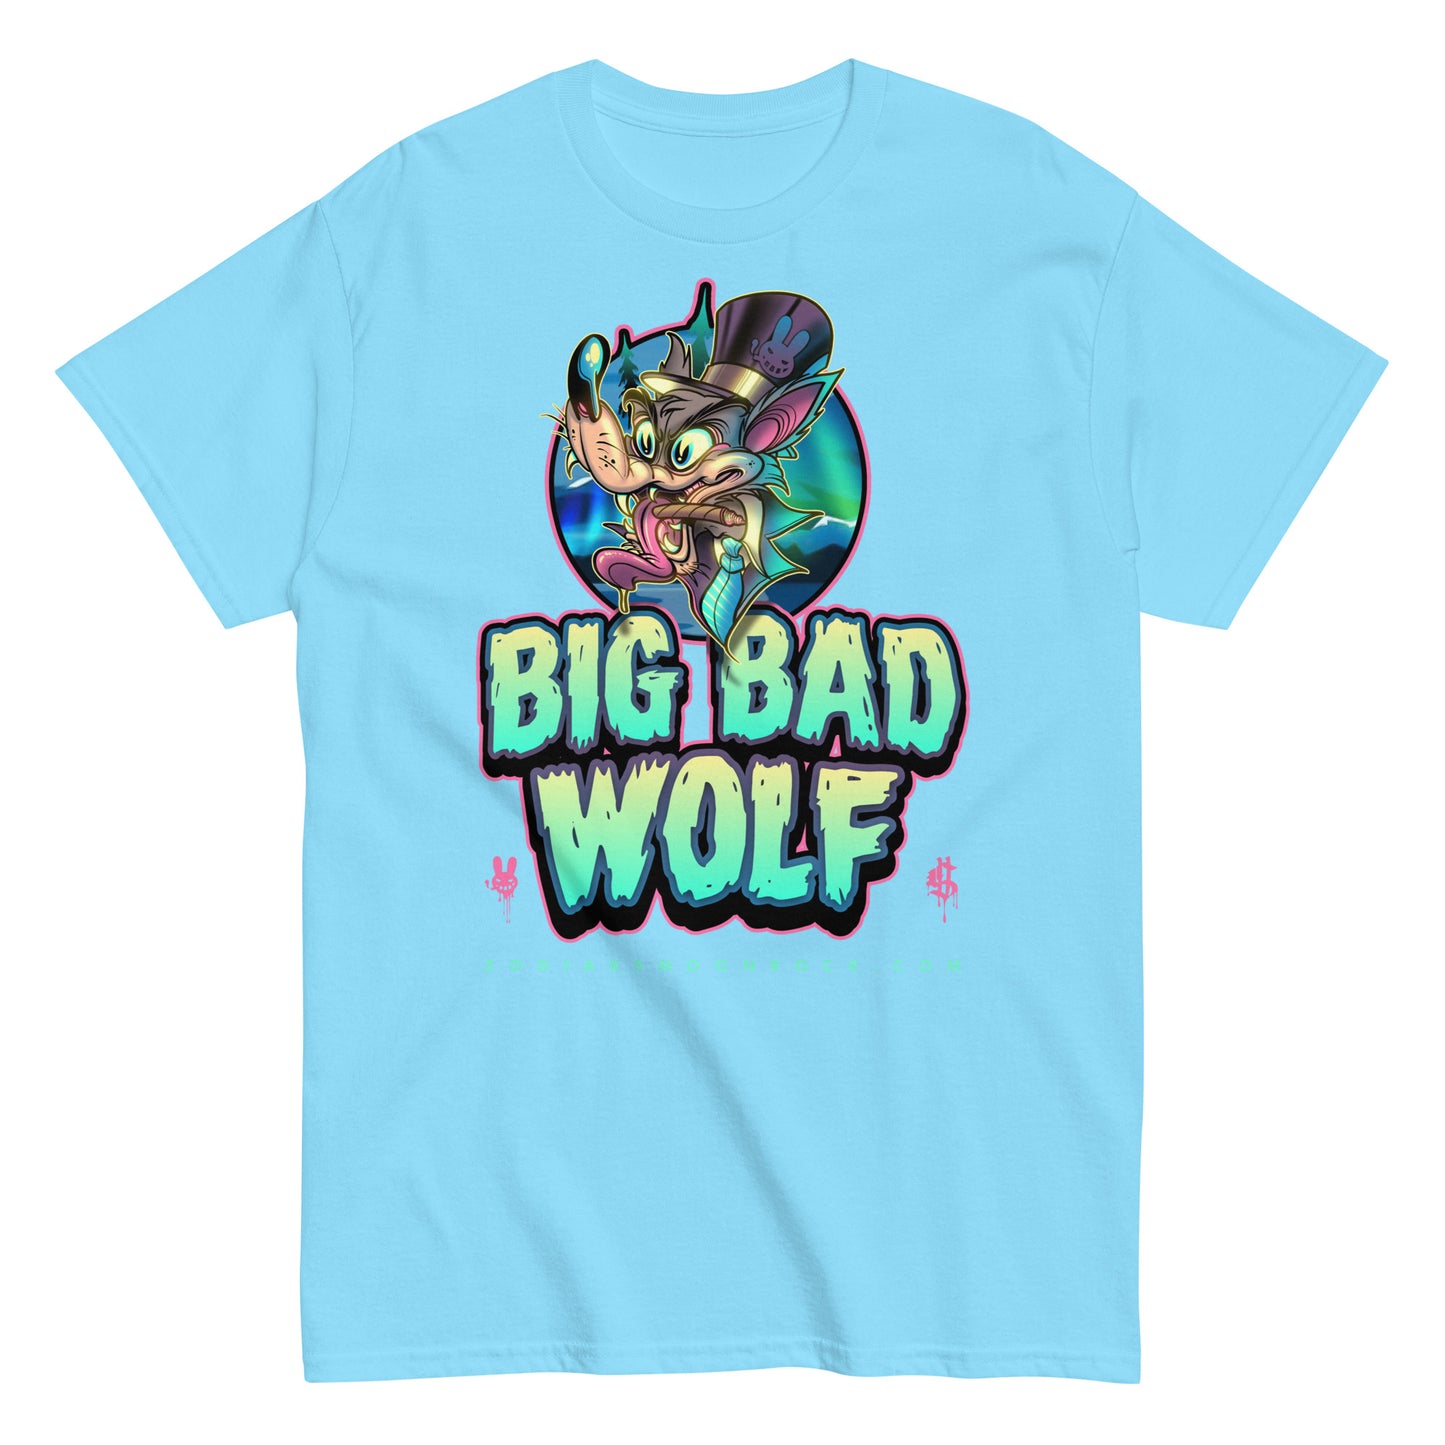 Big Bad Wolf Tee by Dr. Zodiak's Moonrock